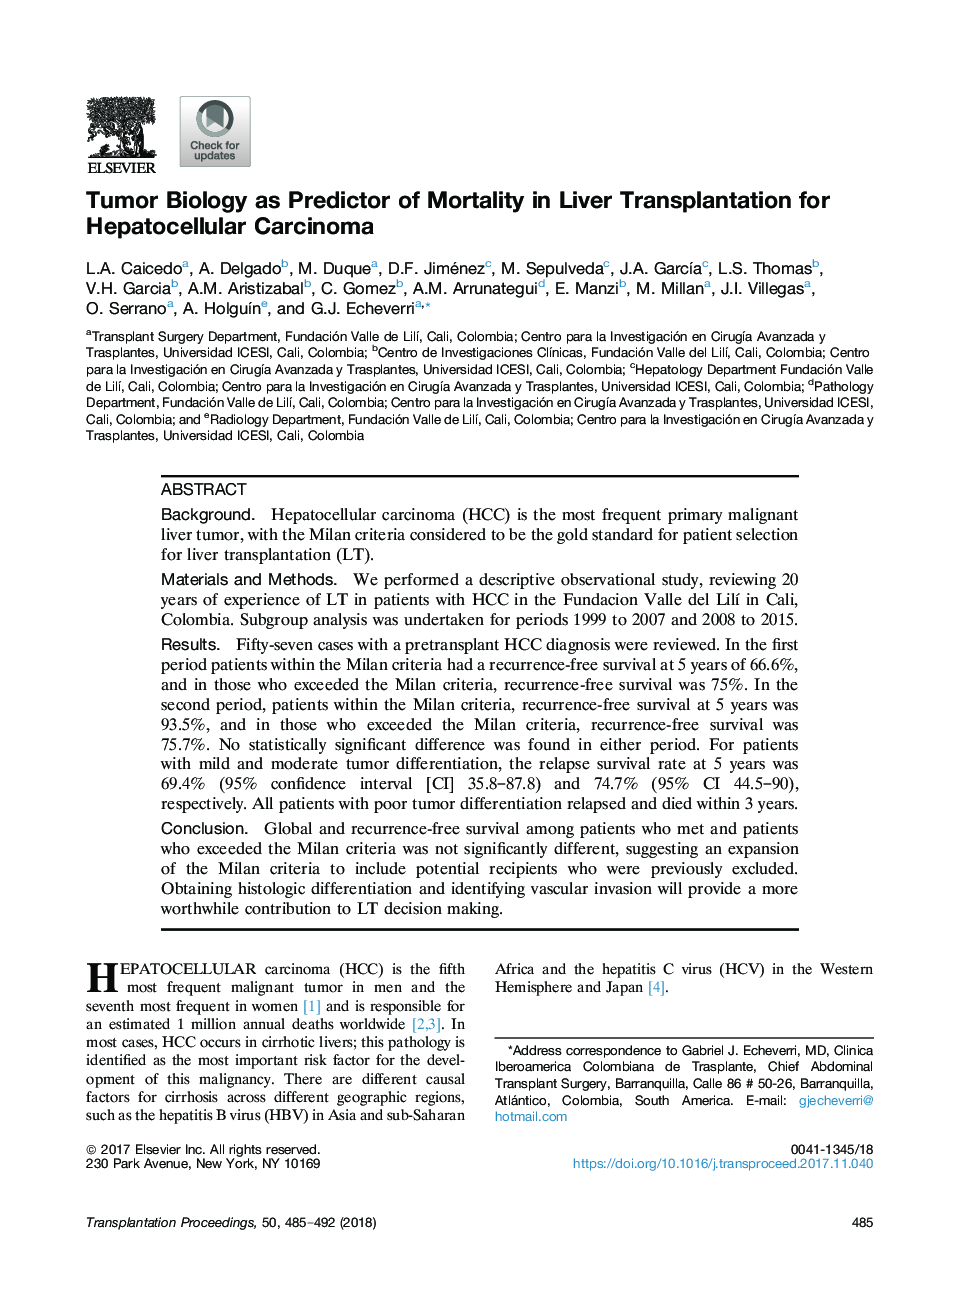 Tumor Biology as Predictor of Mortality in Liver Transplantation for Hepatocellular Carcinoma